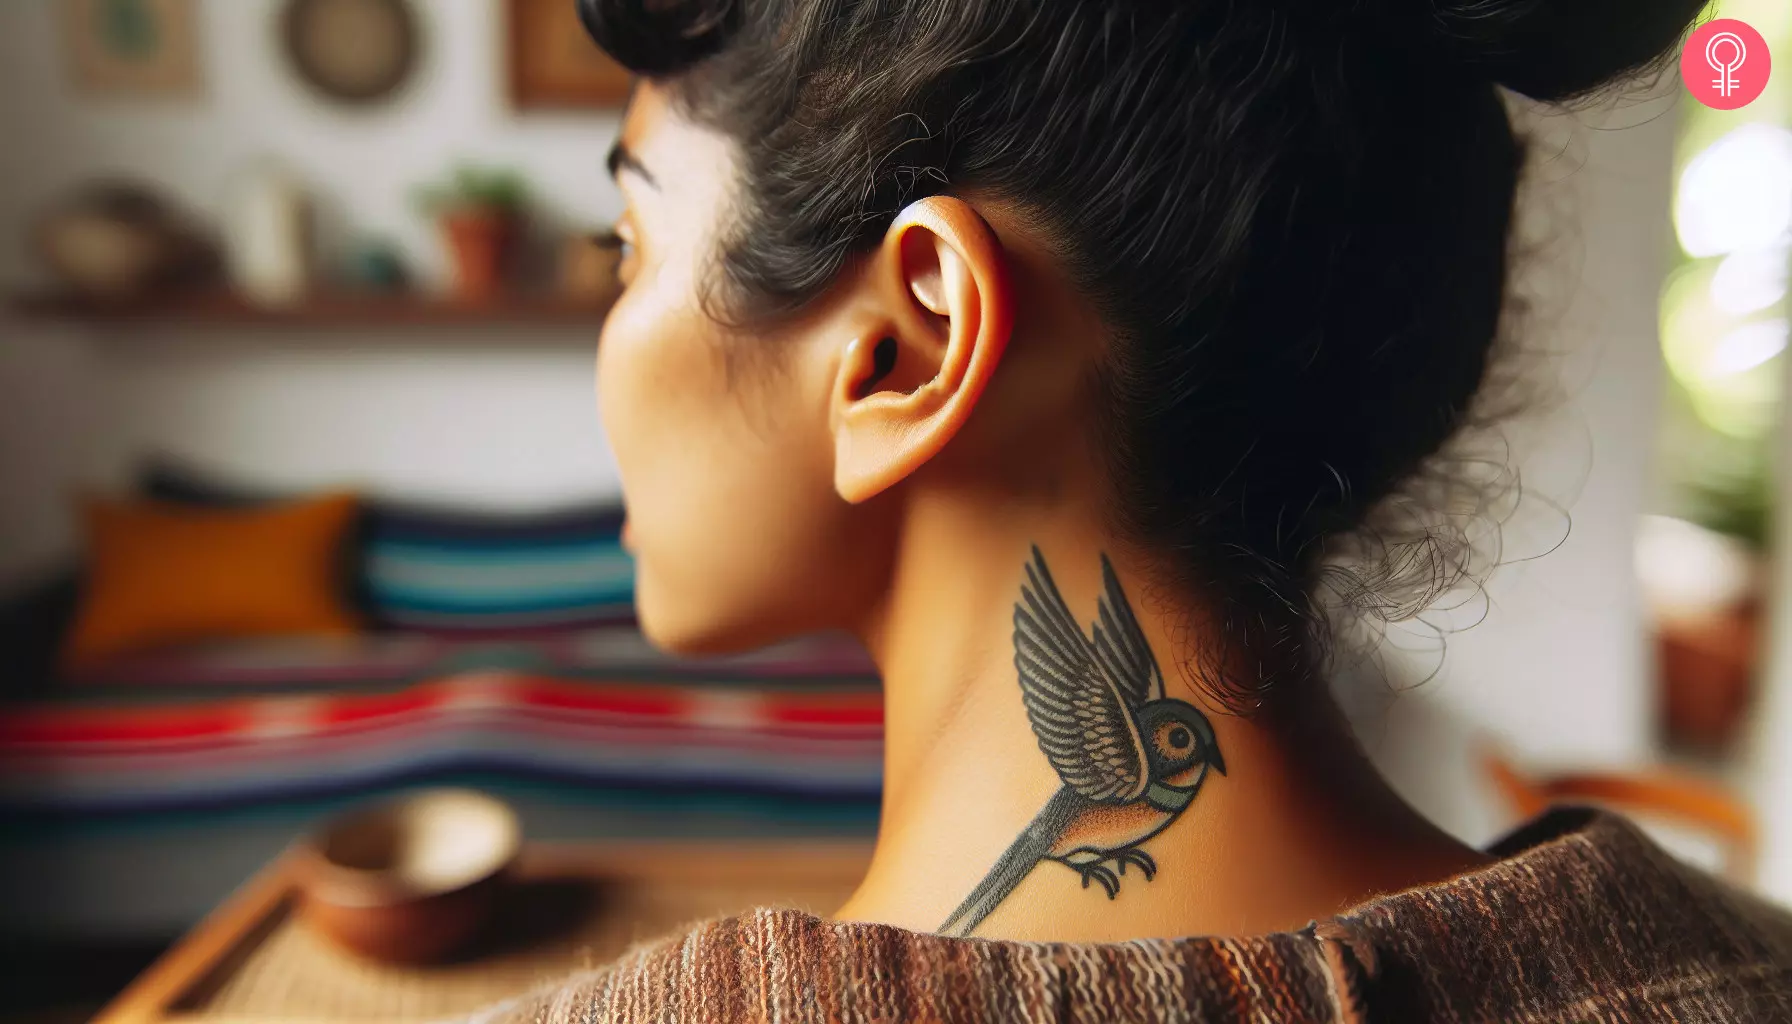 A micro realism bird tattoo near the nape